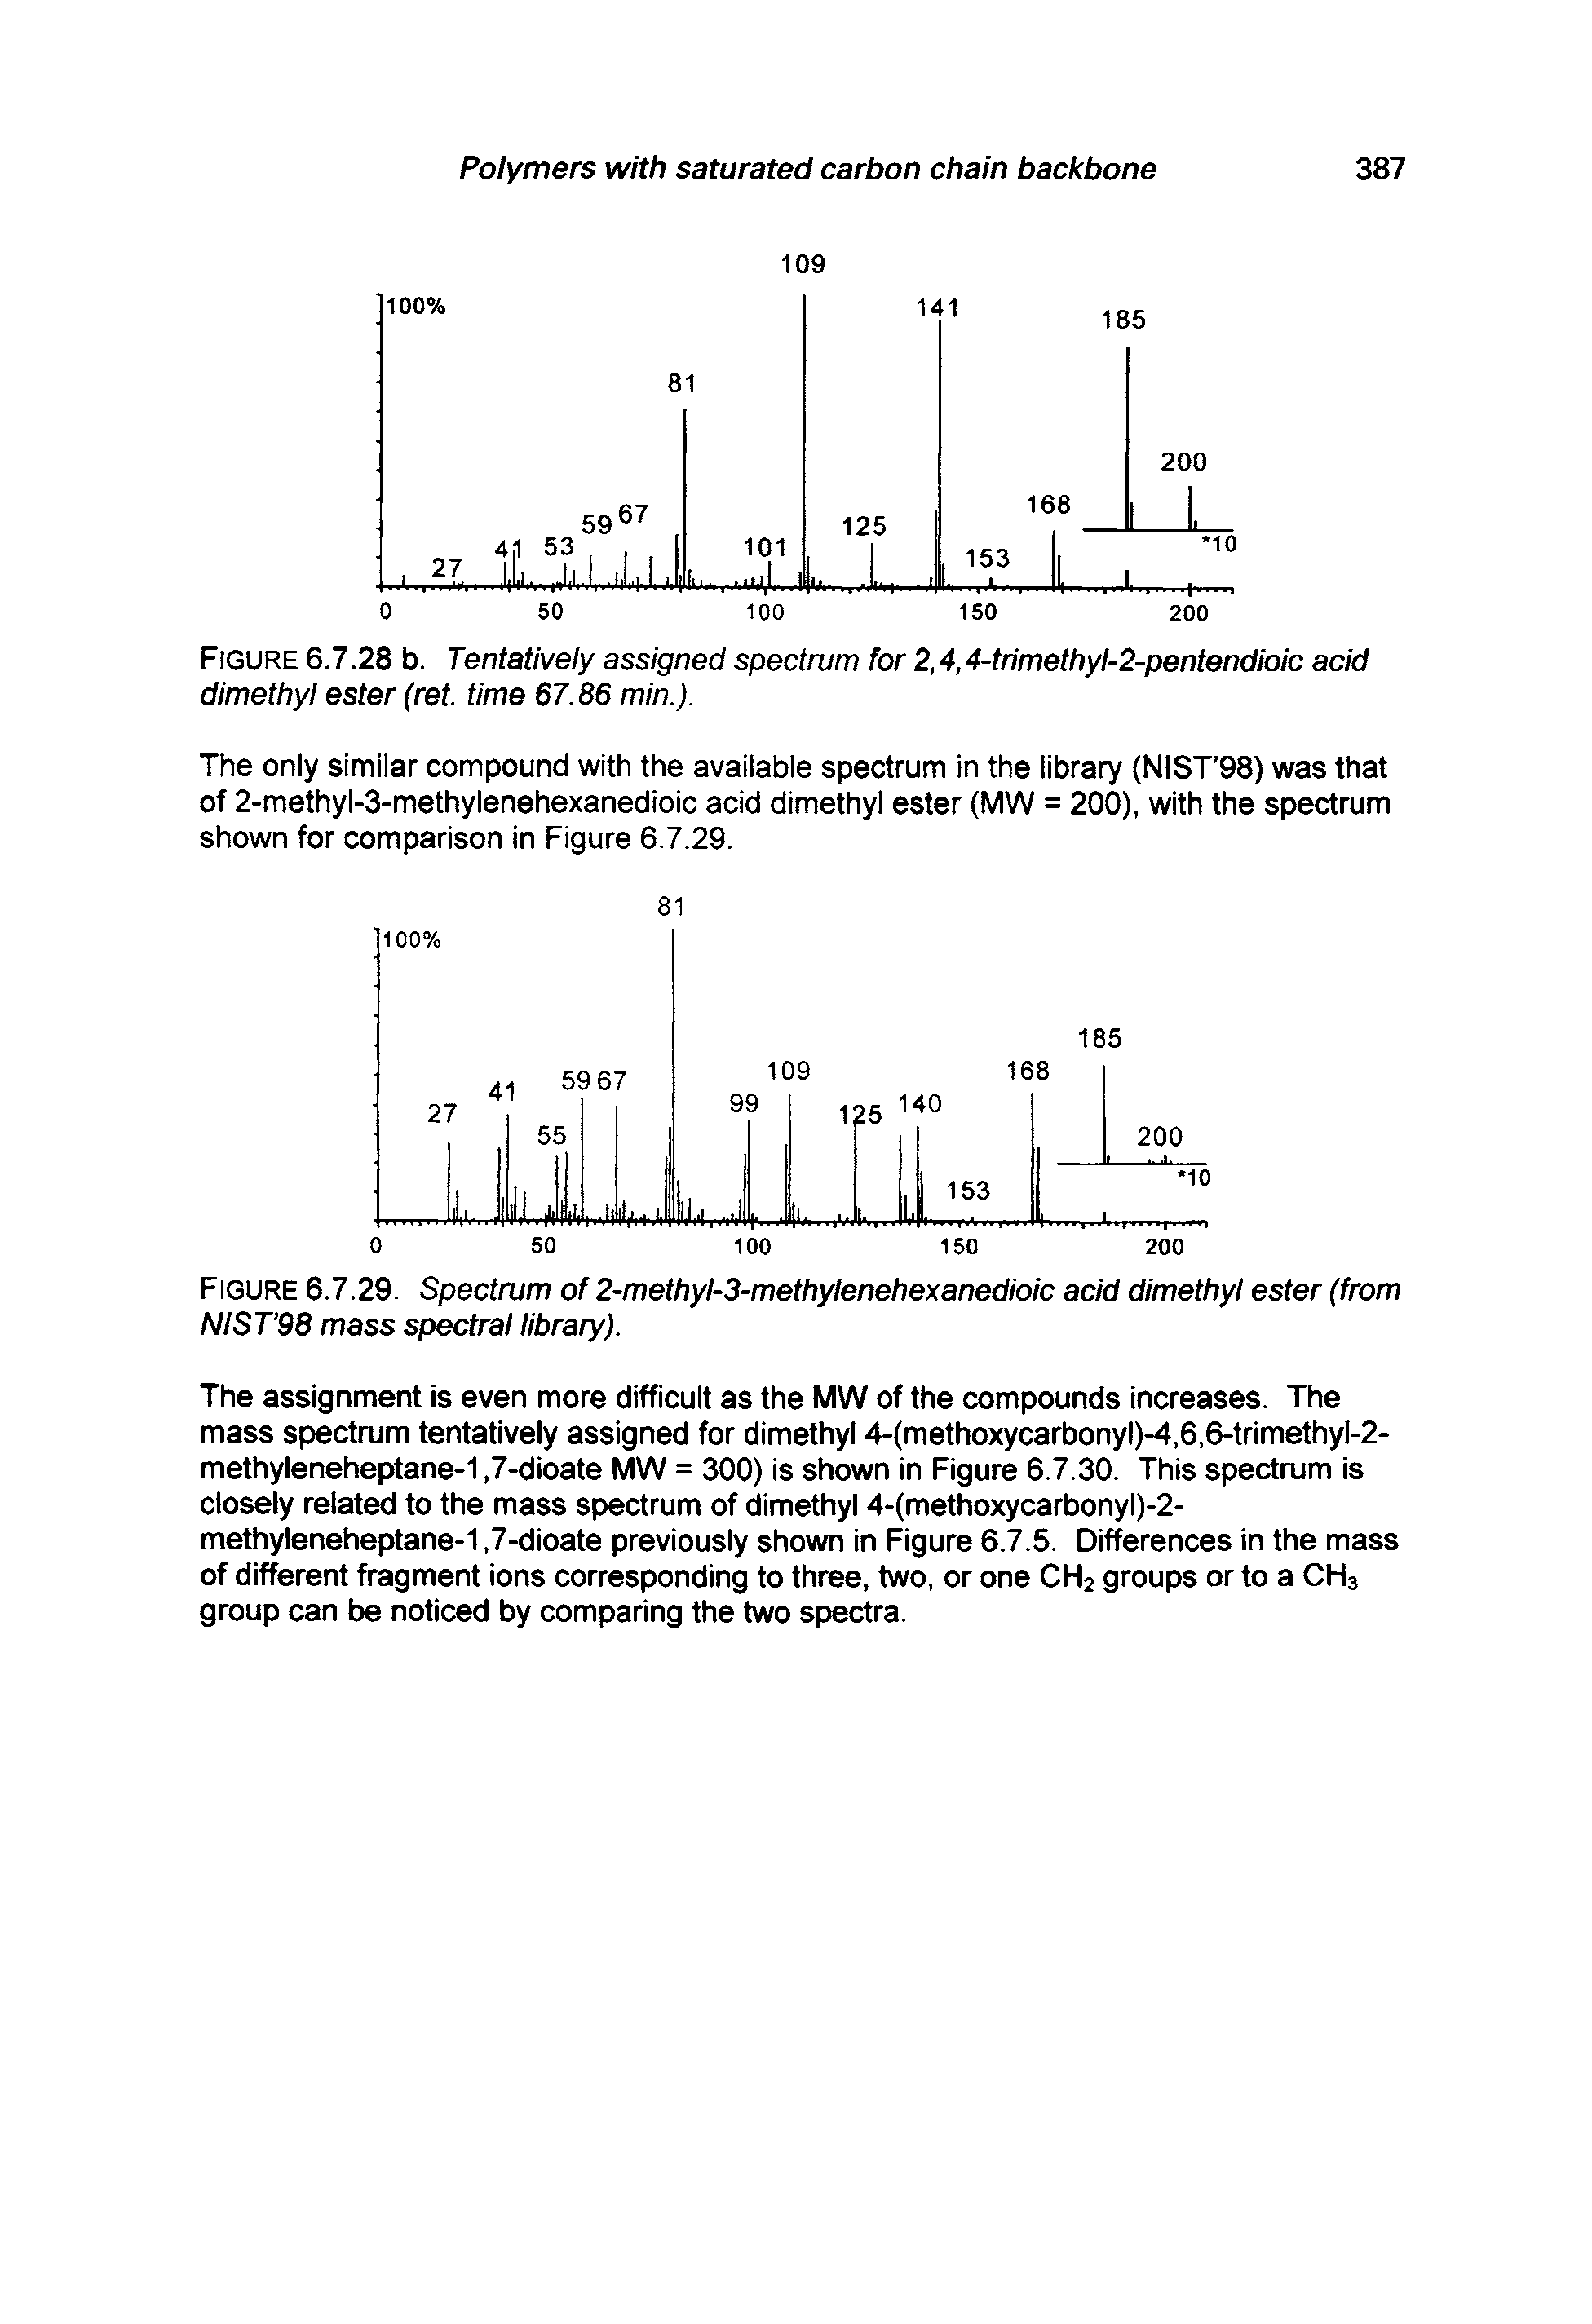 Figure 6.7.29. Spectrum of 2-methyl-3-methylenehexanedioic acid dimethyl ester (from NIST 98 mass spectral library).